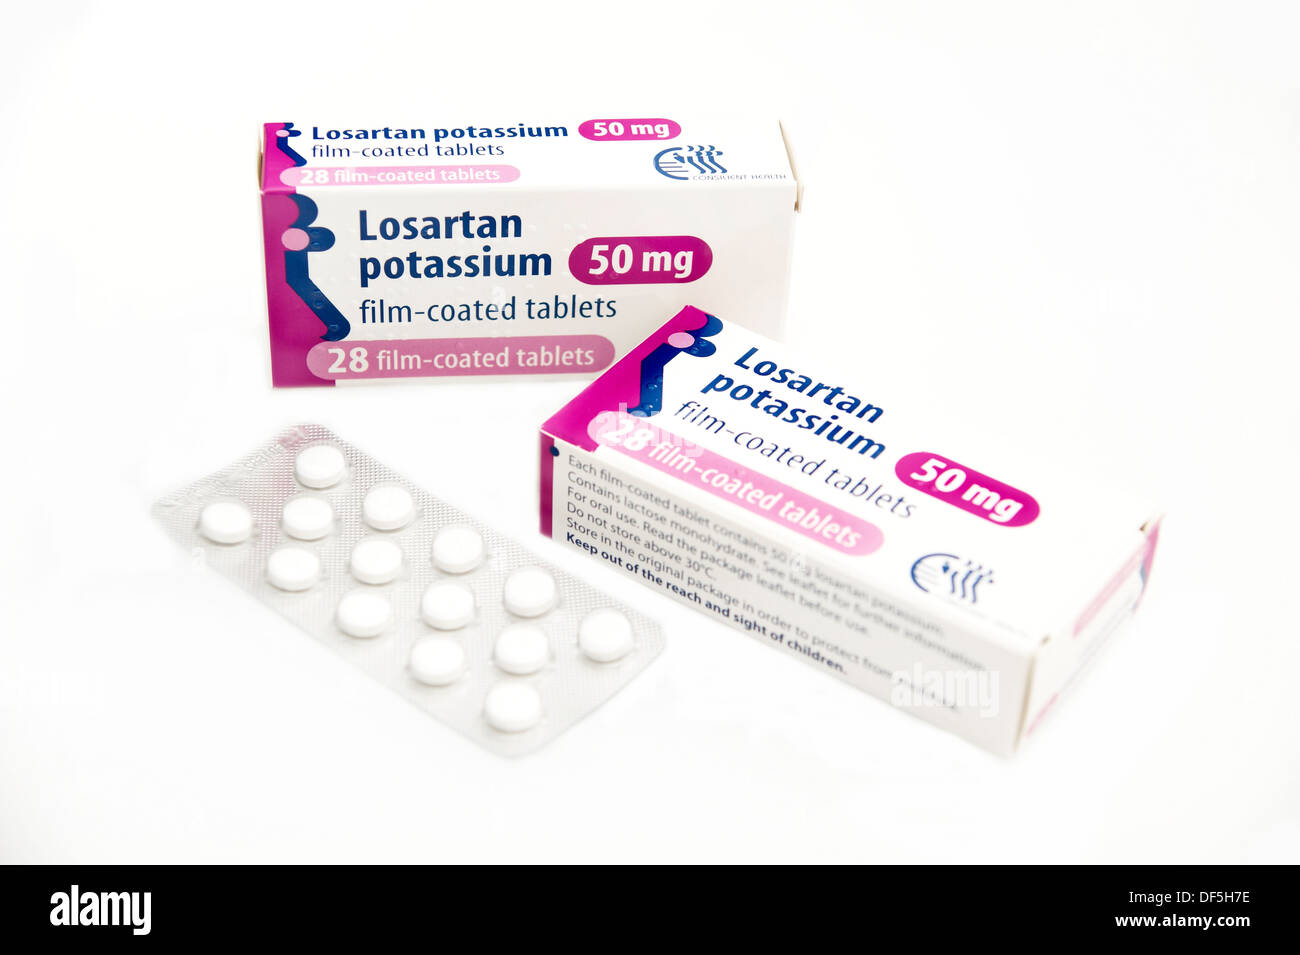 losartan-potassium-tablets-used-for-lowering-high-blood-pressure-DF5H7E.jpg